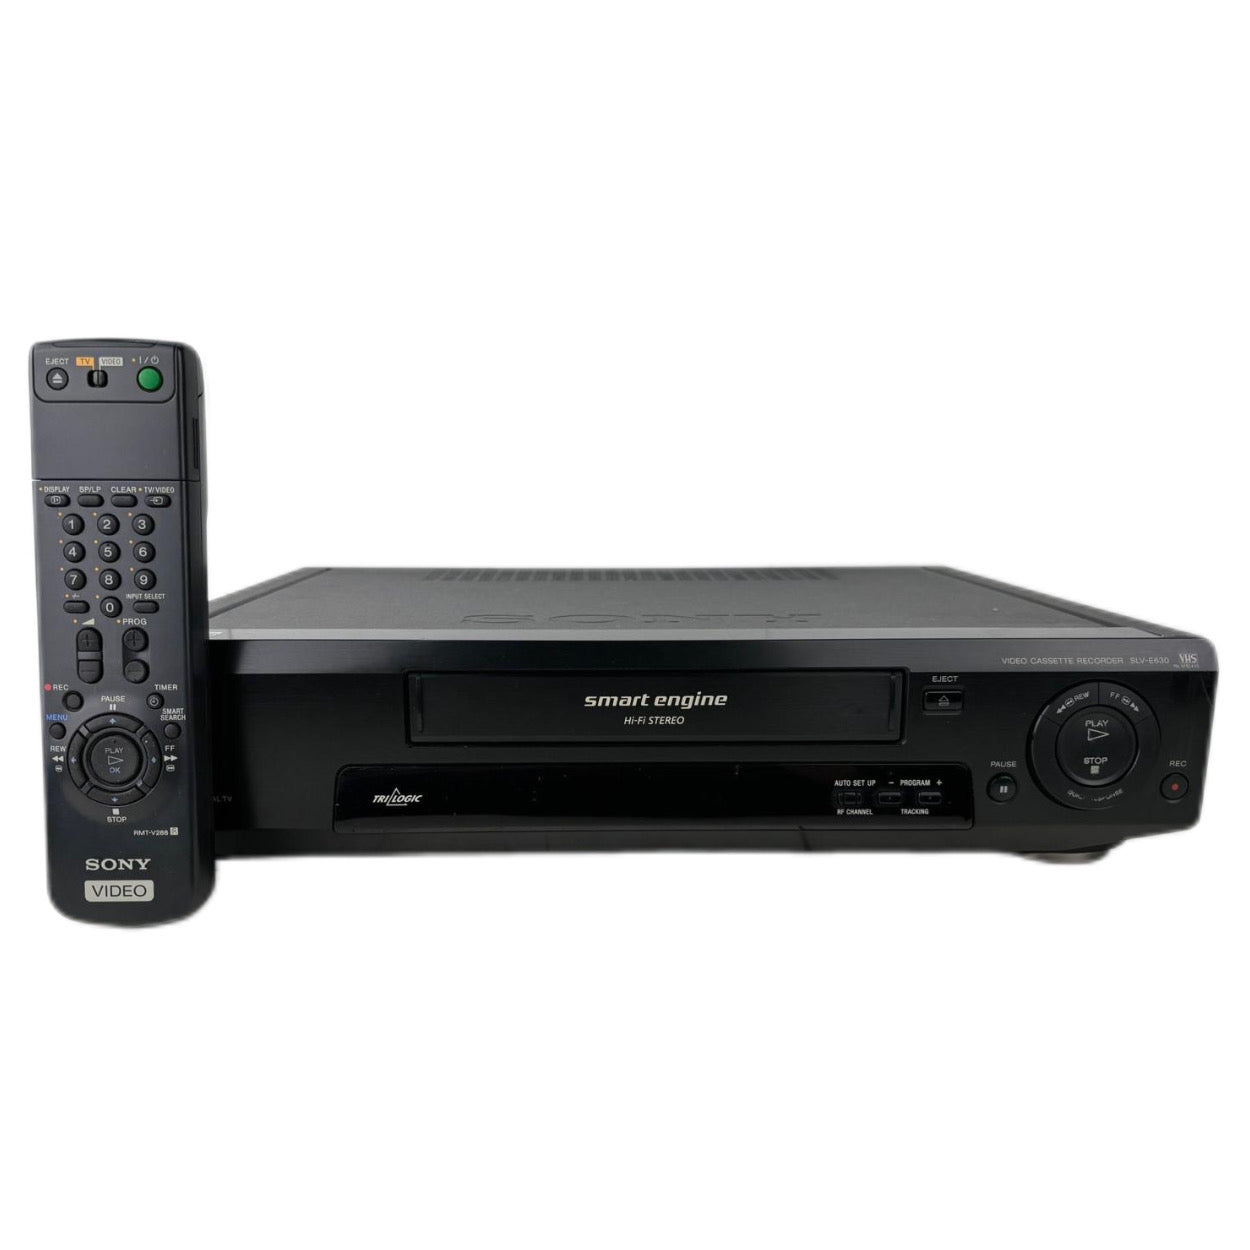 Sony SLV-E630 Video Cassette Recorder With Remote!